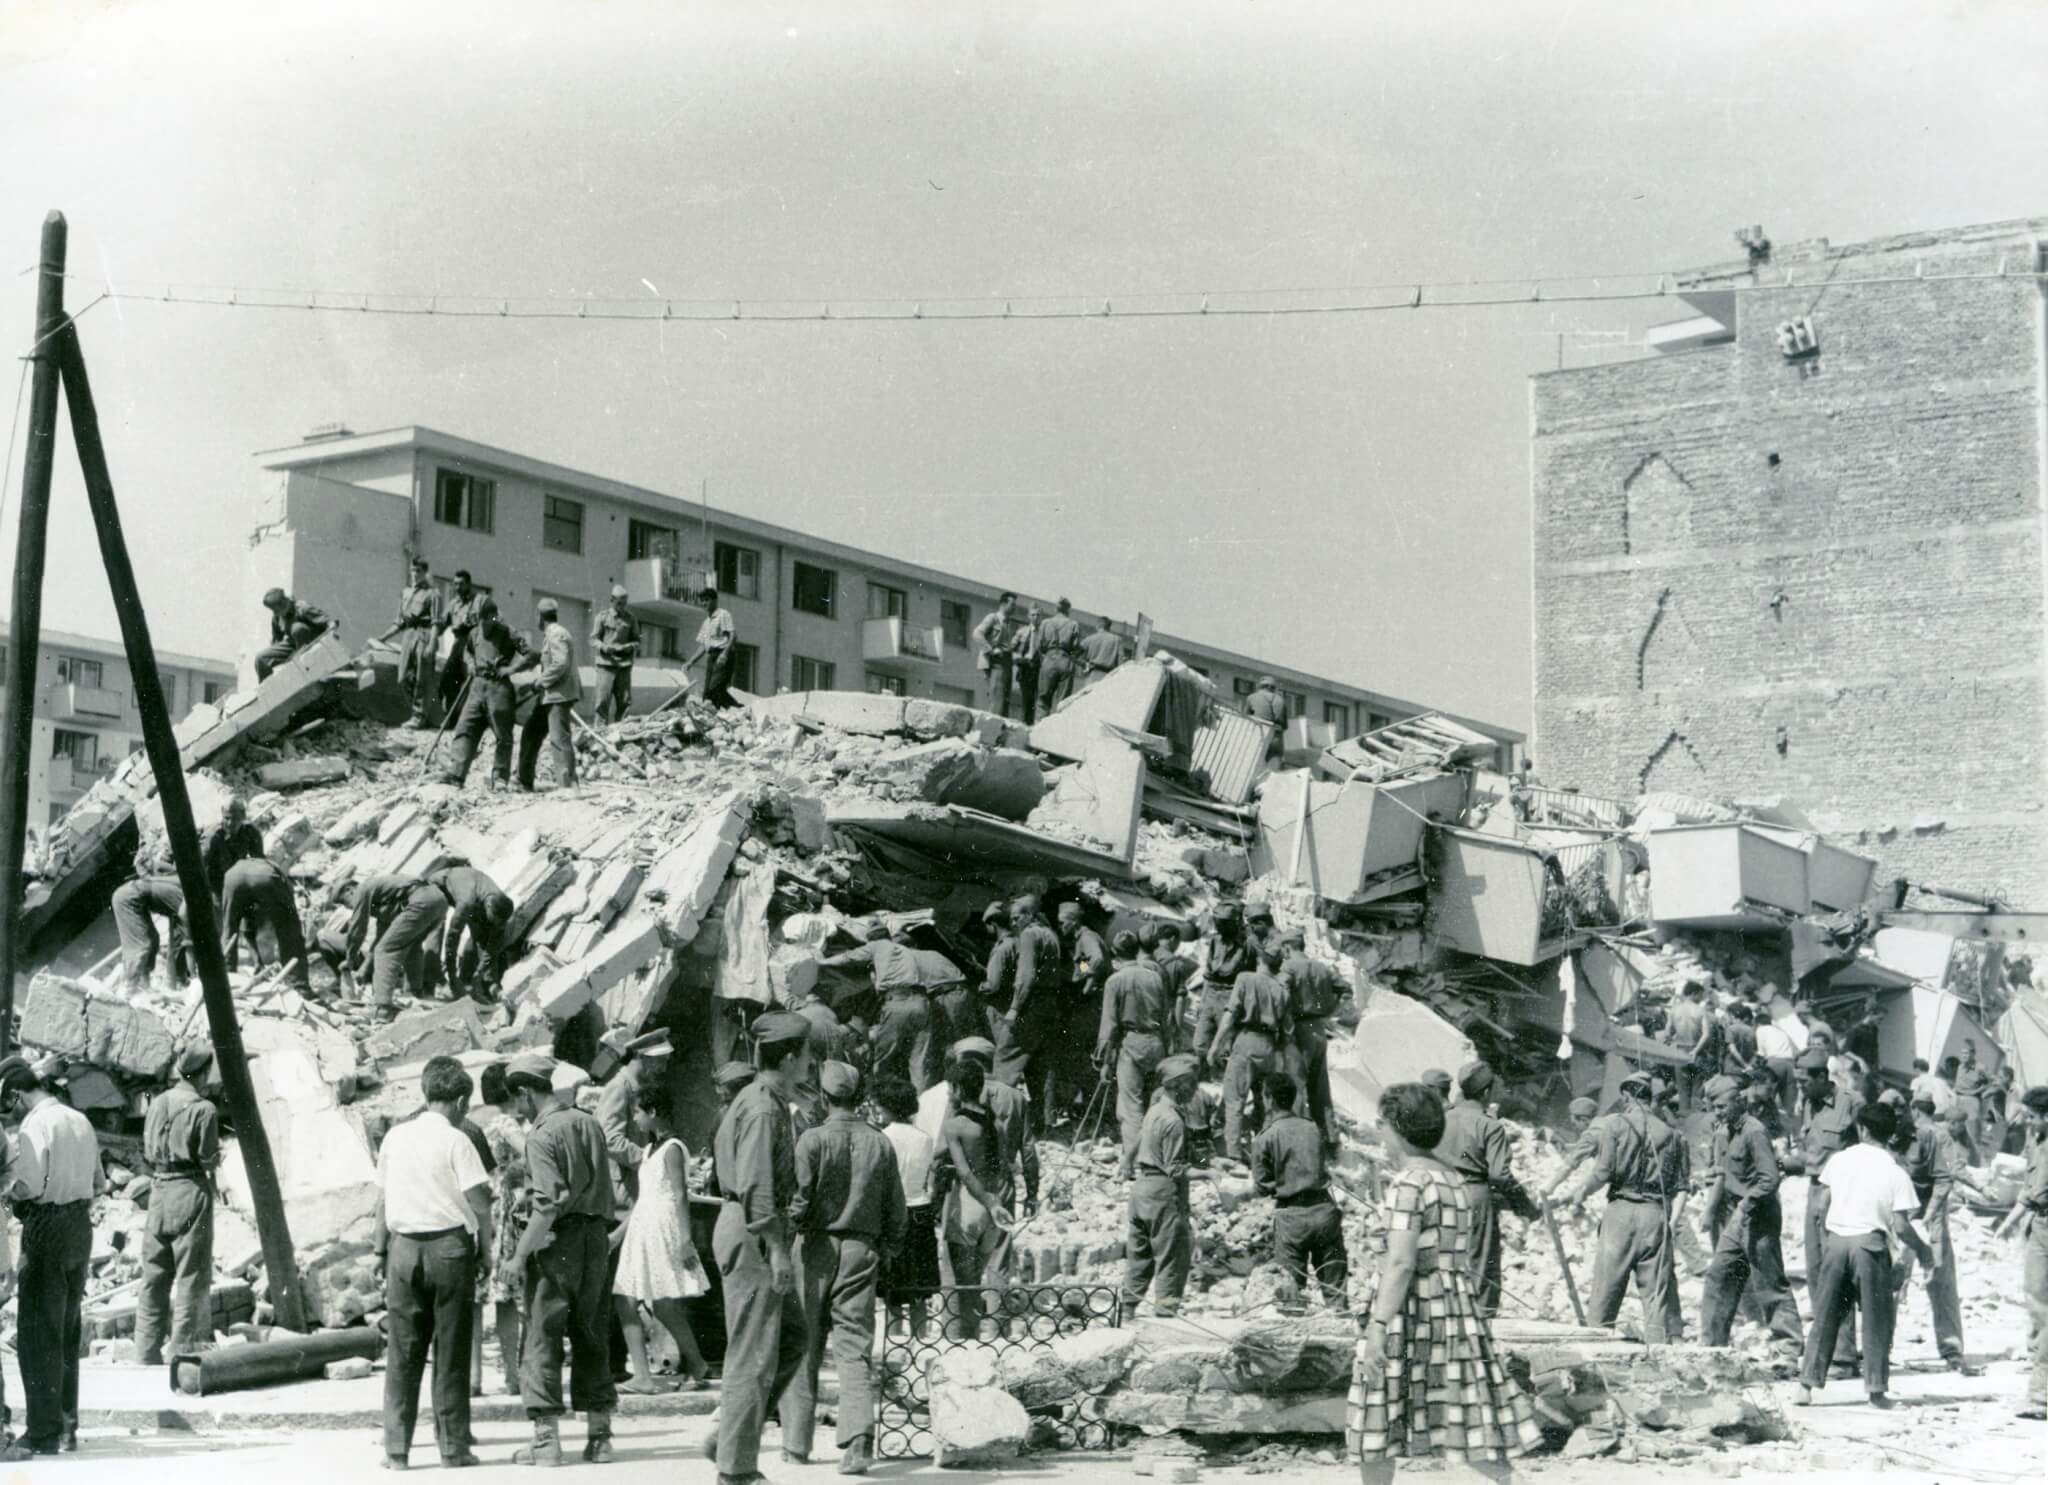 a black and white image of earthquake rubble